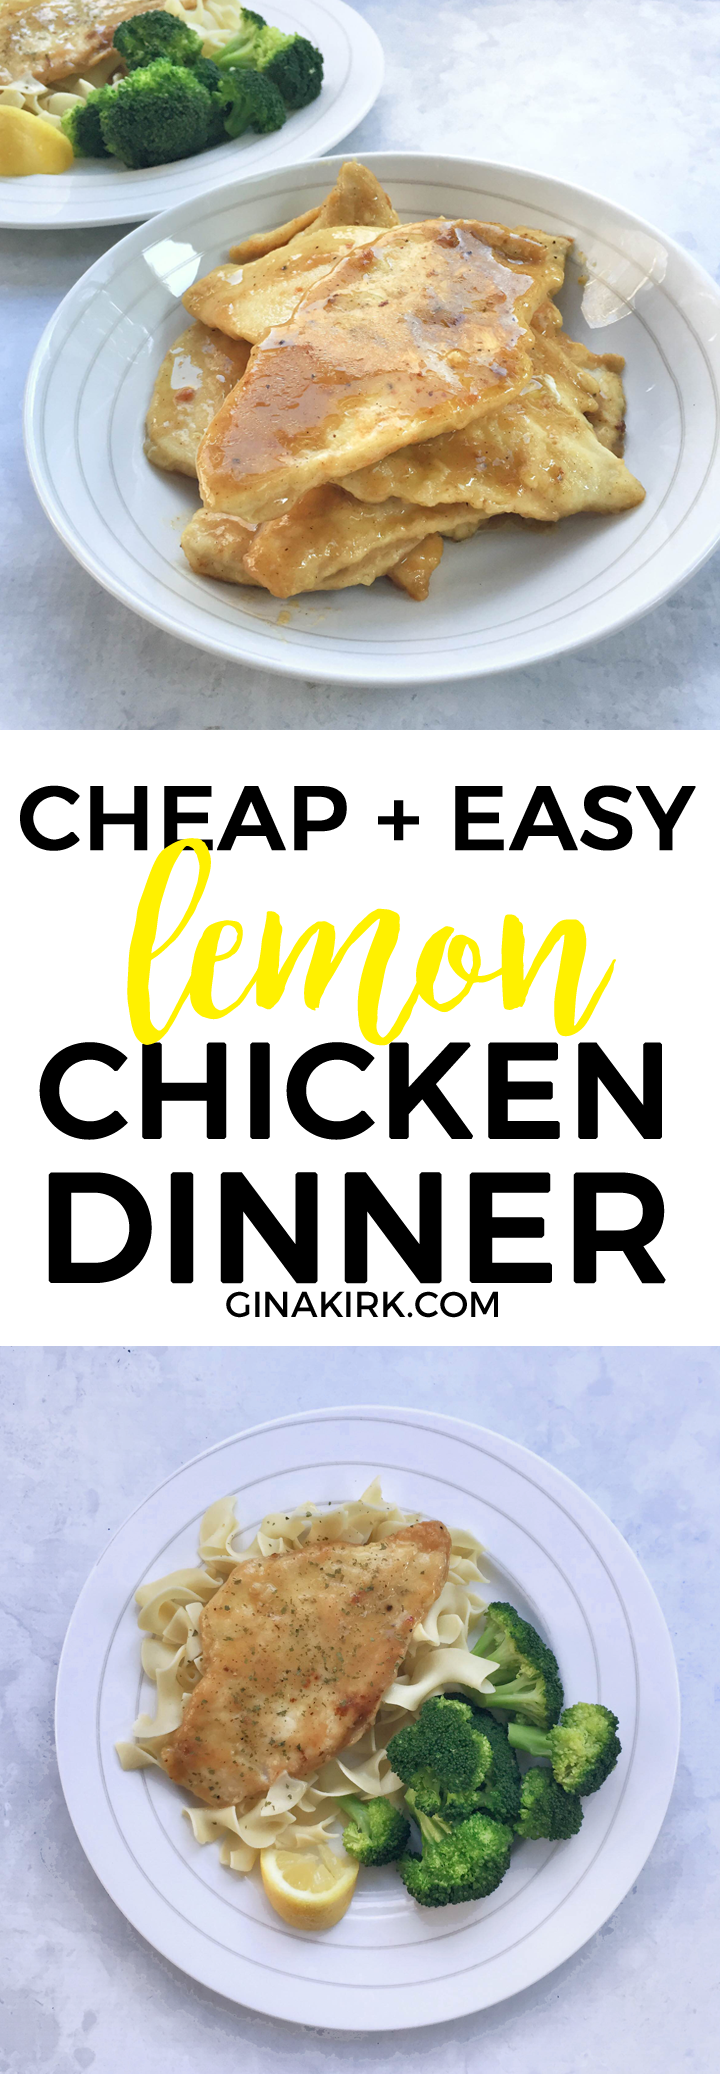 Cheap and easy lemon chicken dinner | chicken picatta | lemon chicken | dairy free gluten free chicken recipe | GinaKirk.com